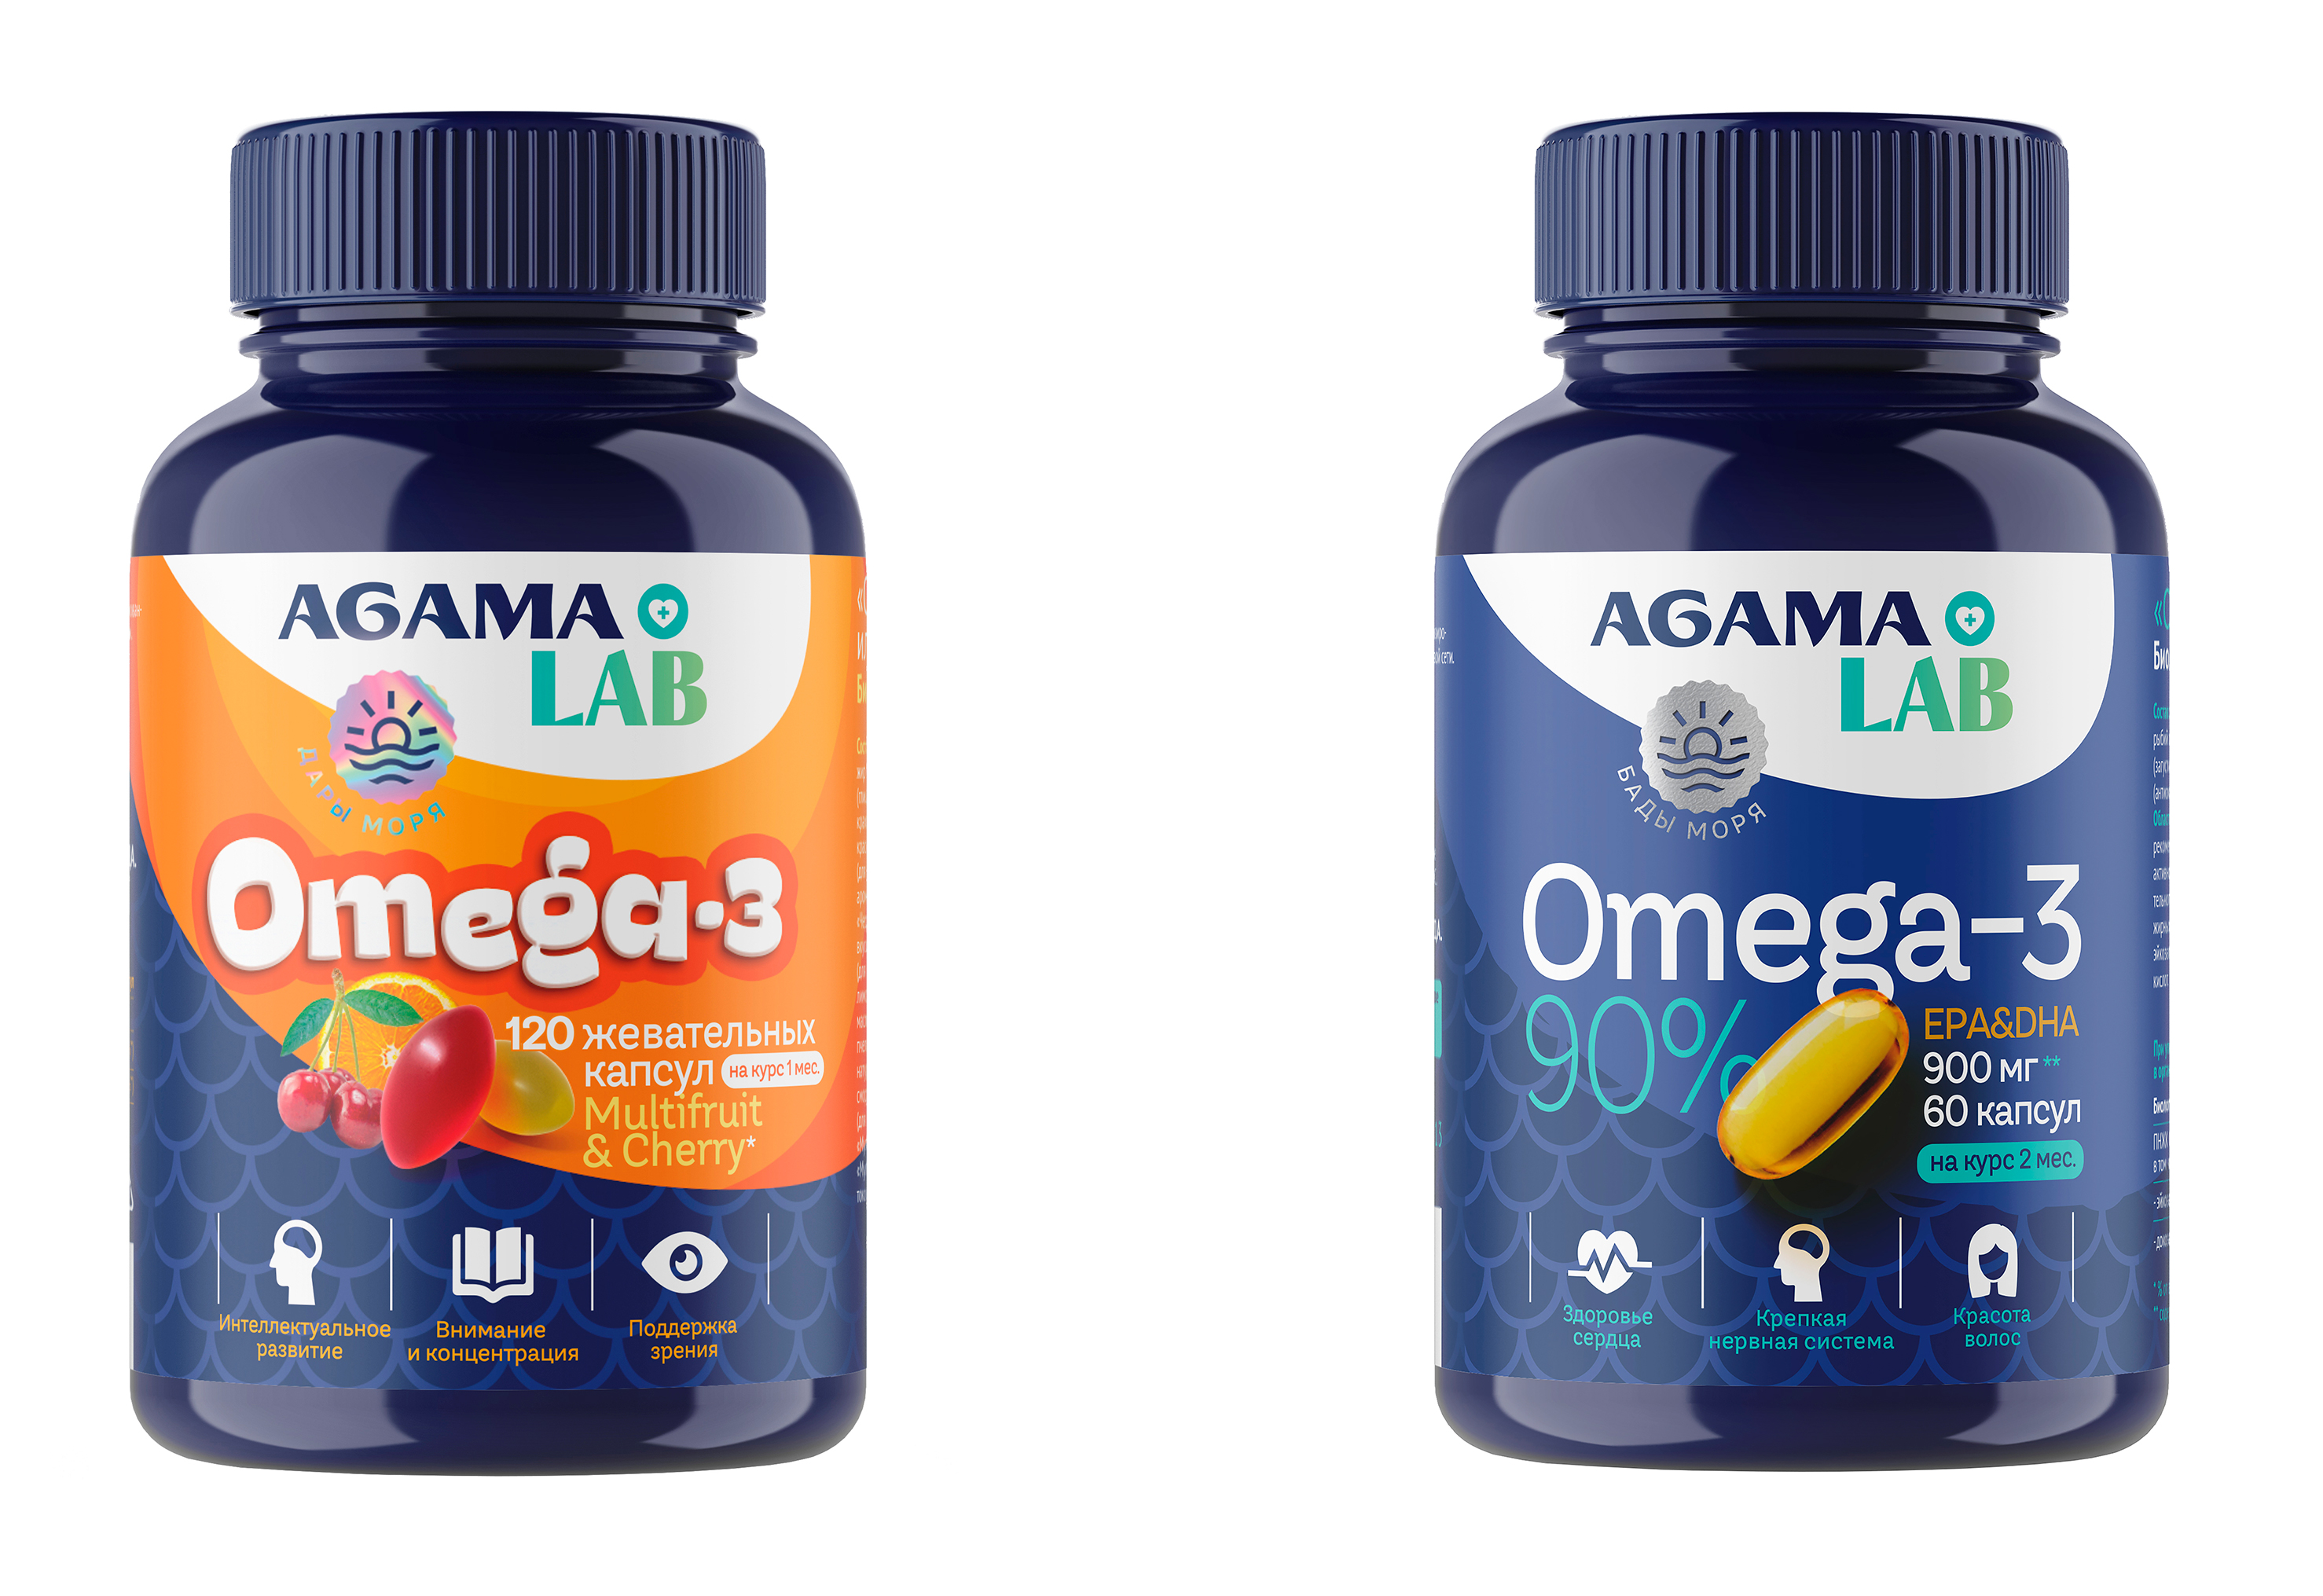 El omega 3 engorda o adelgaza